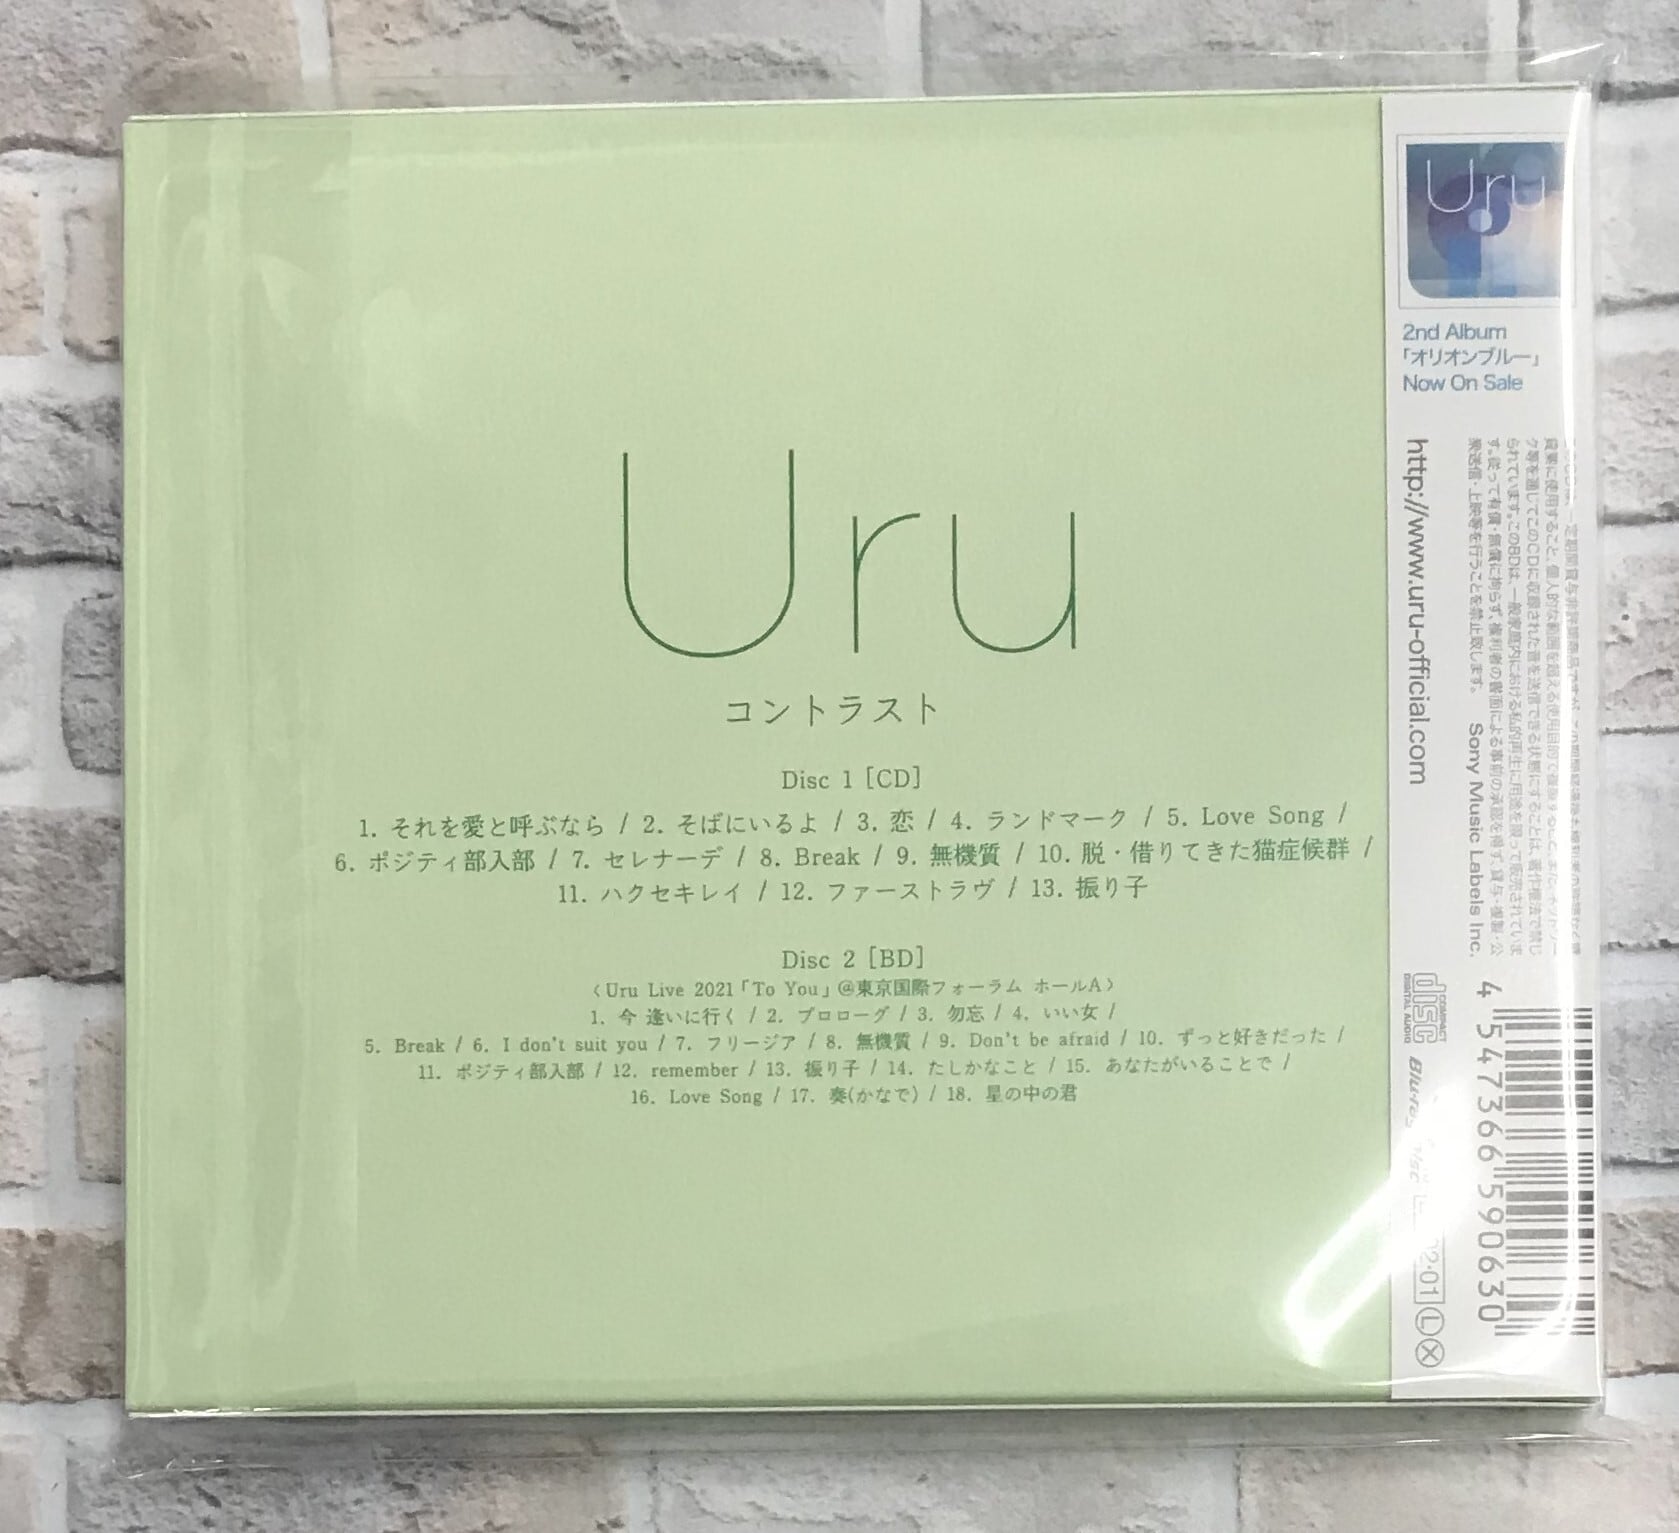 【新品】Uru オリオンブルー 初回生産限定盤 CD+Blu-ray 映像盤